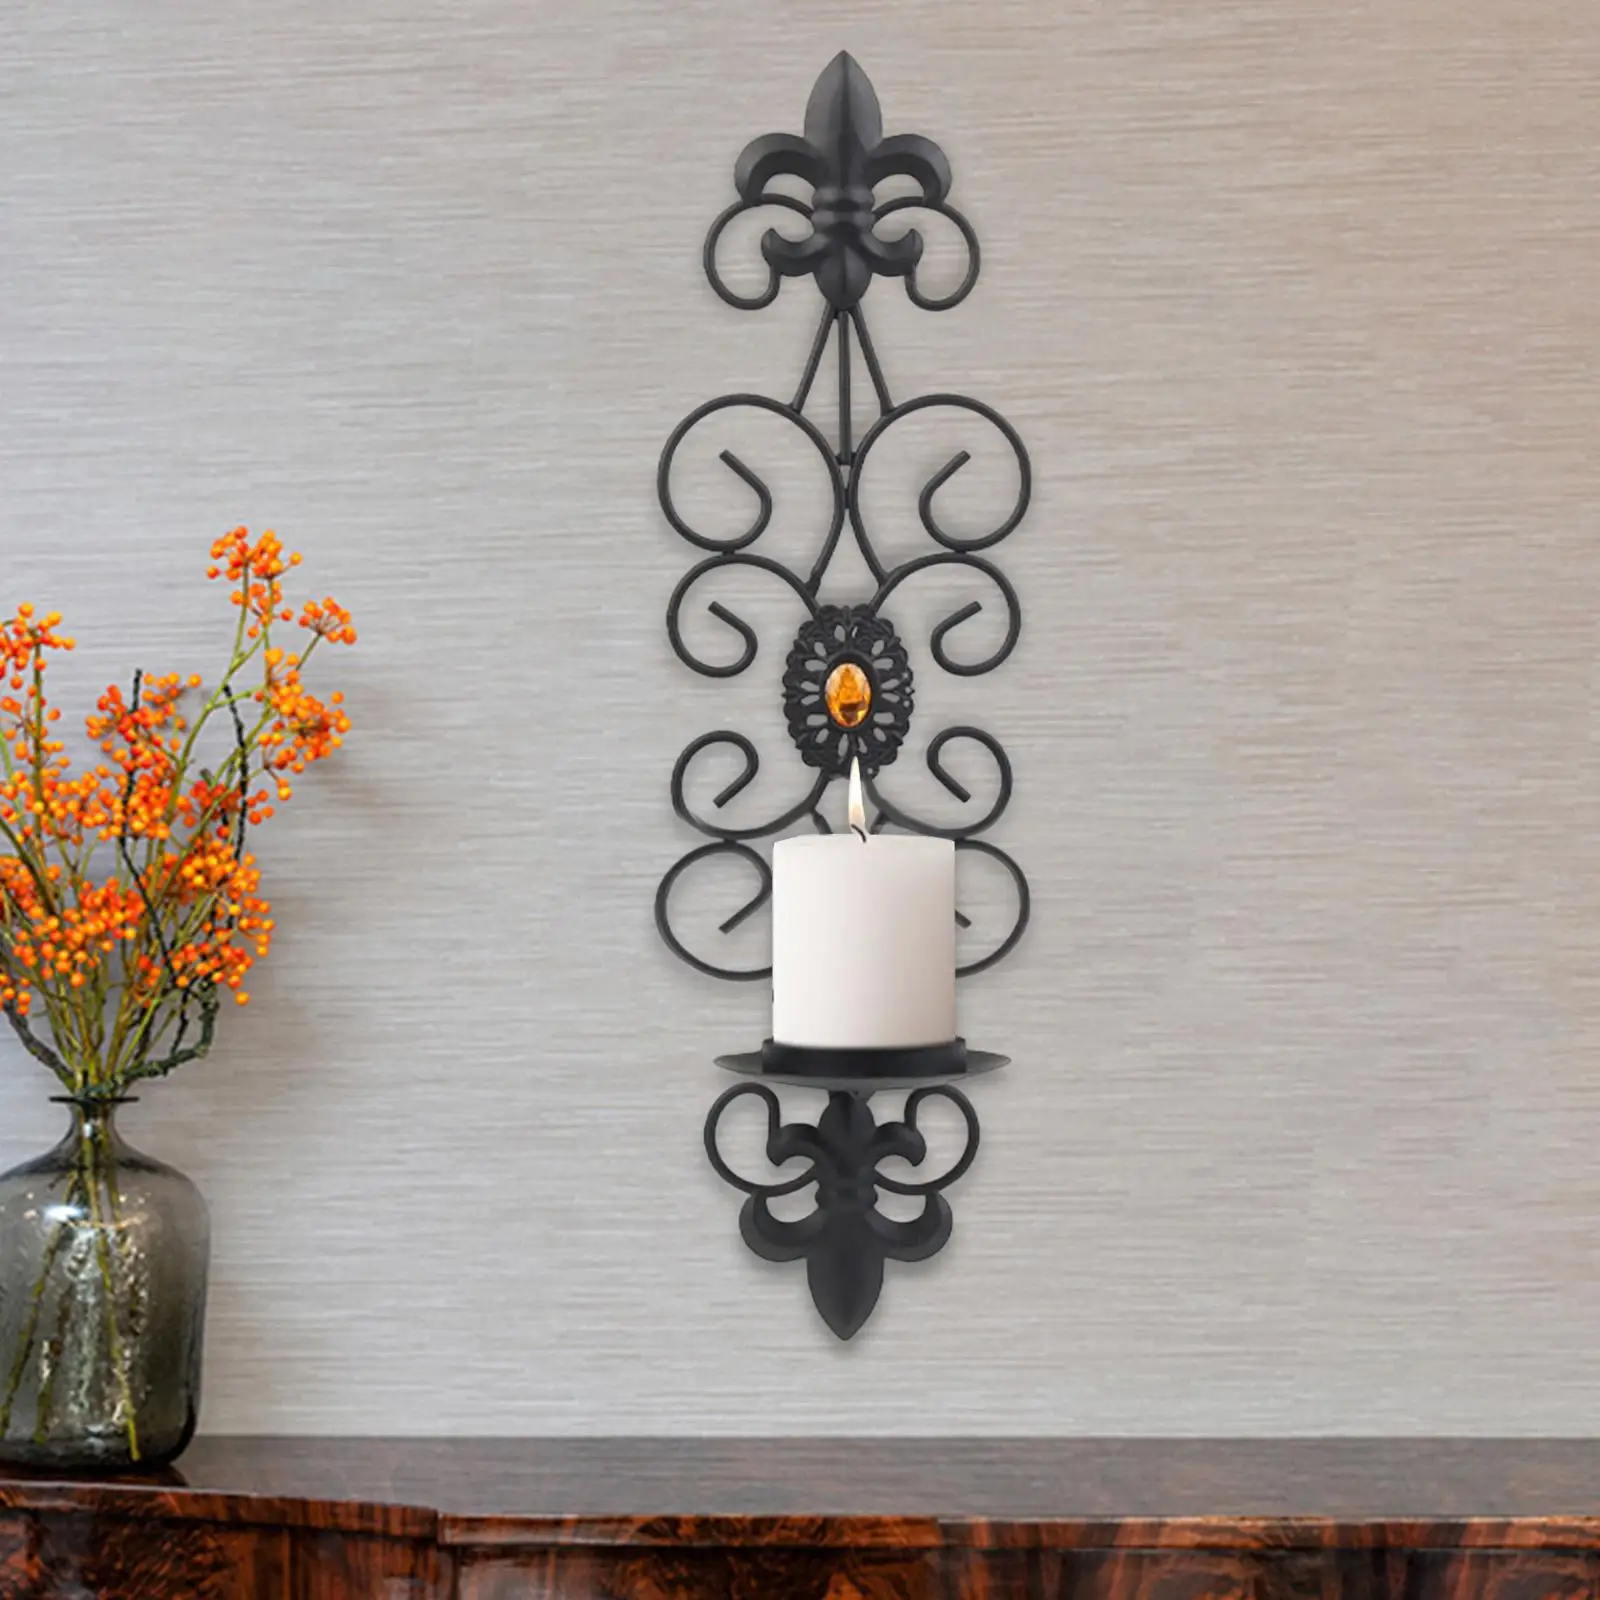 Black Iron Metal Tea Light Holder Decorative Wall Art for Living Room